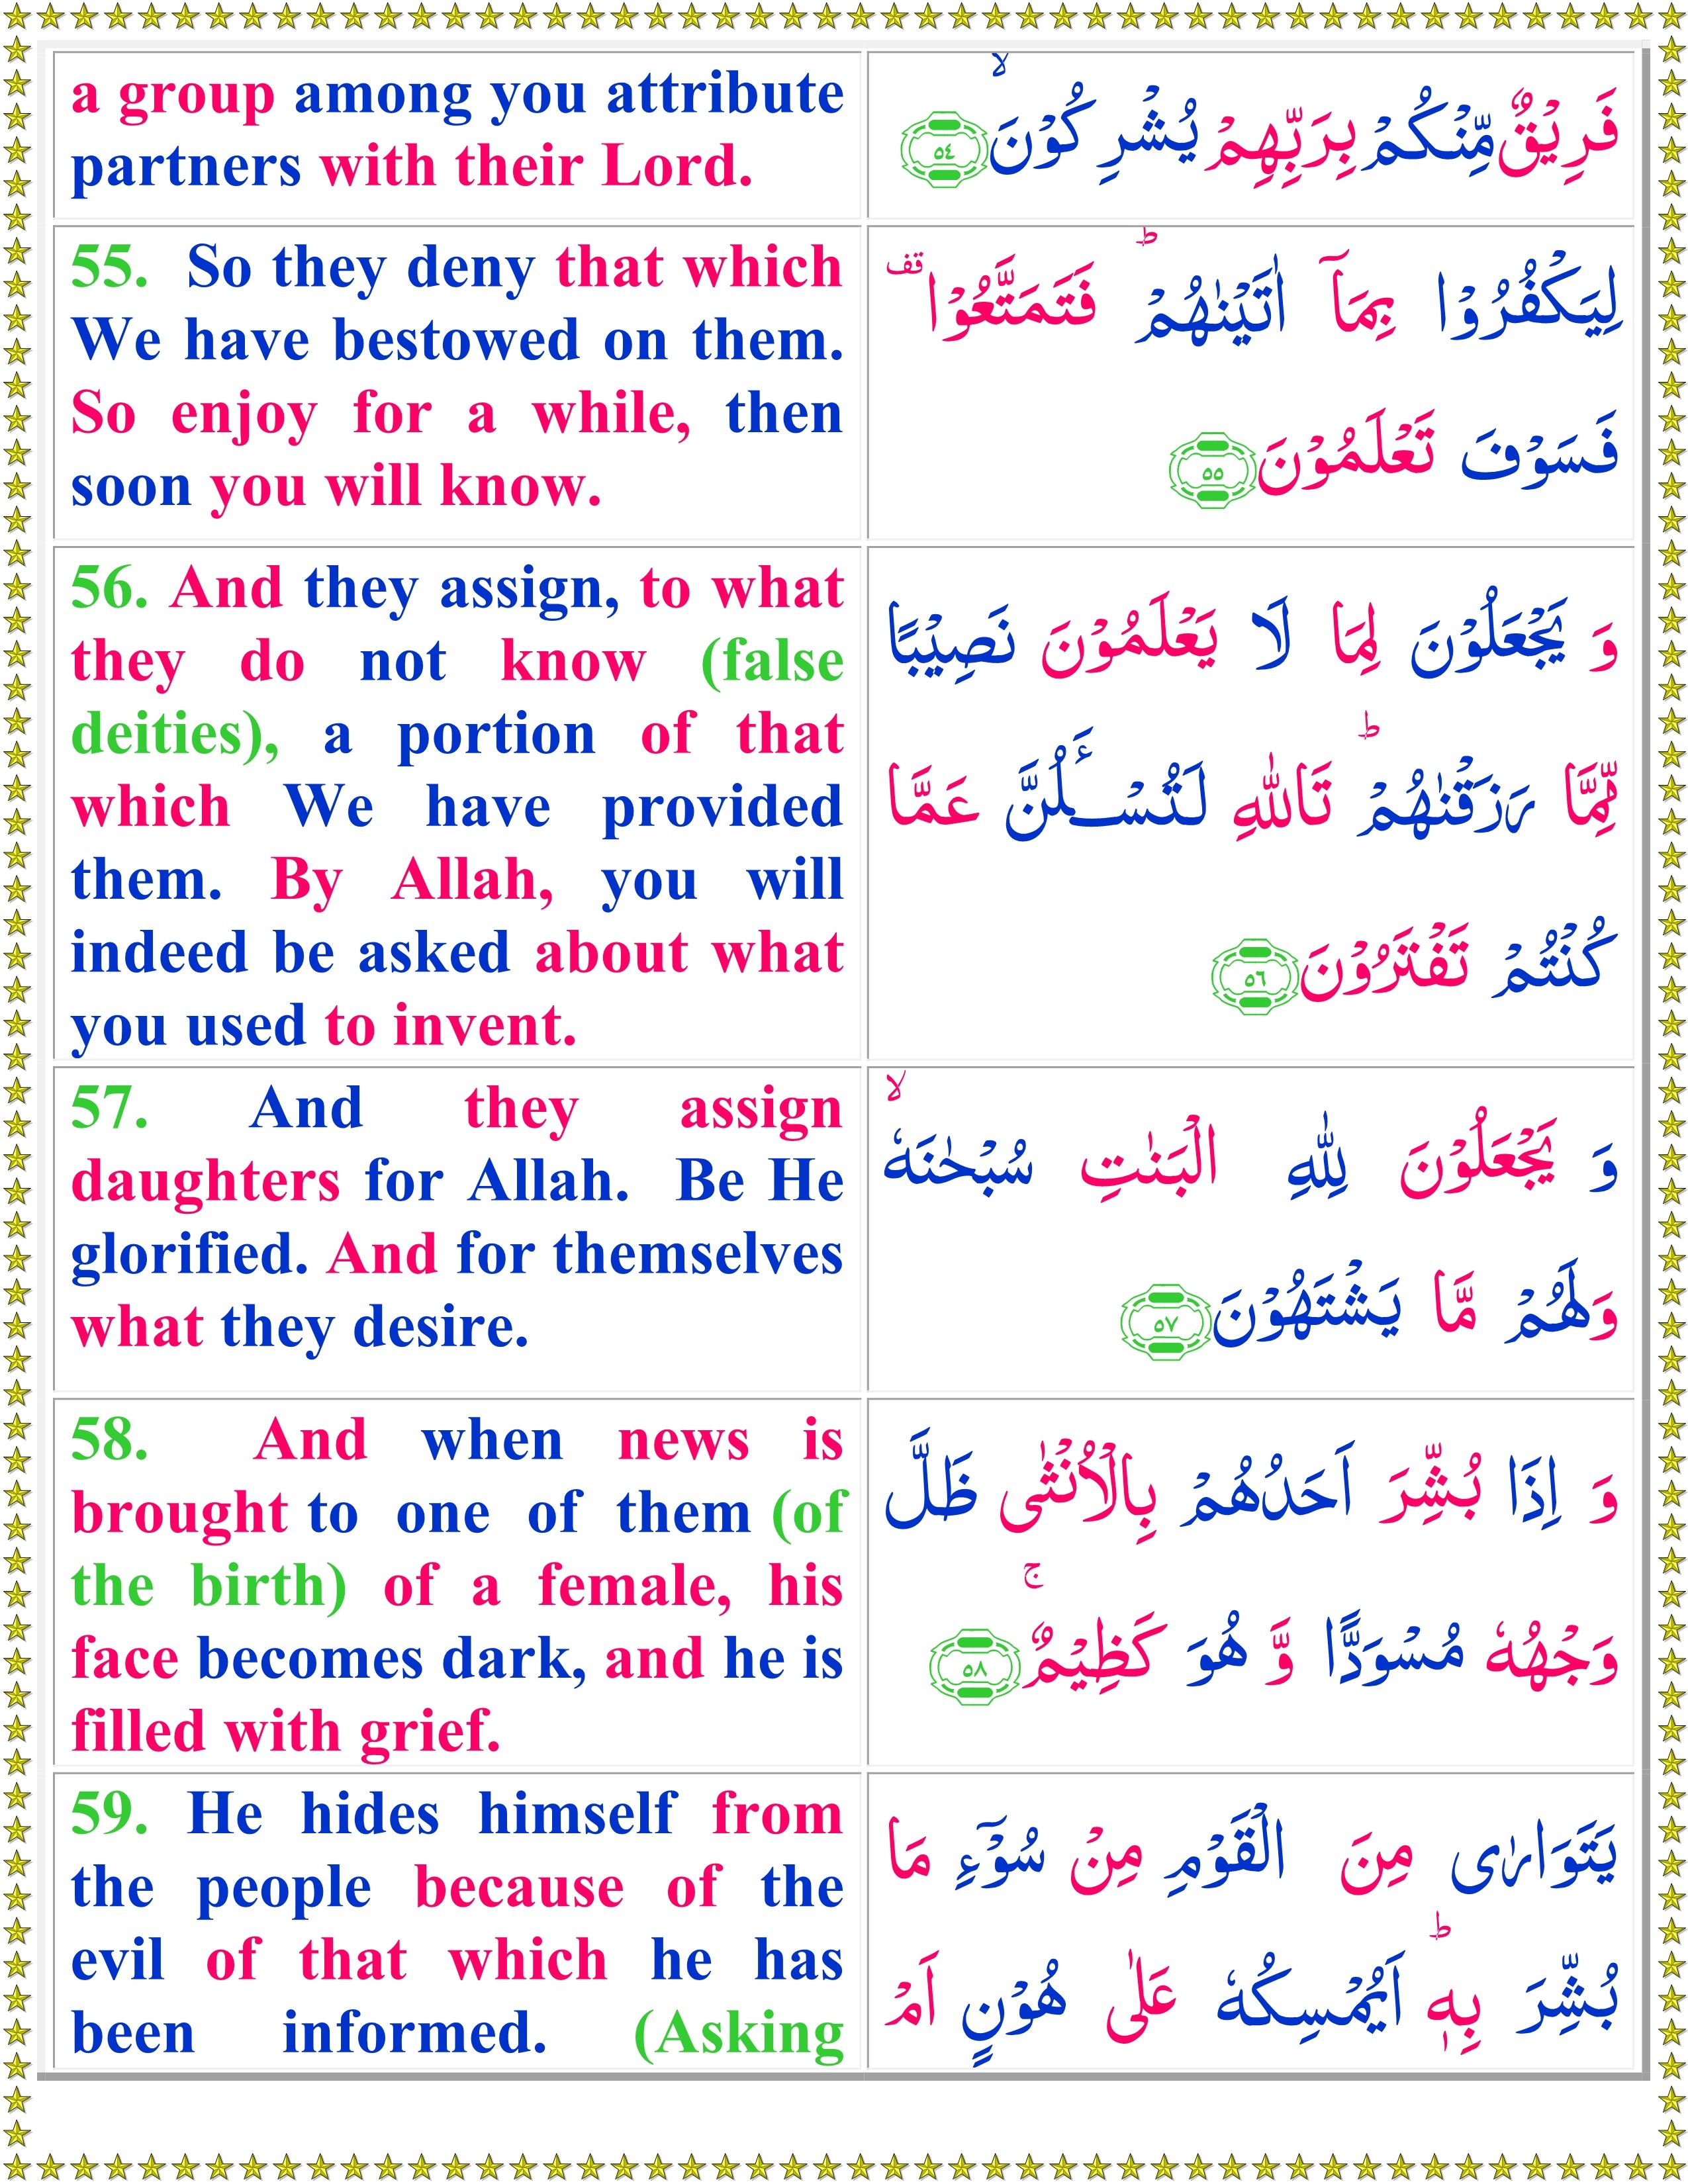 Read Surah Al Nahl With English Translation Quran O Sunnat